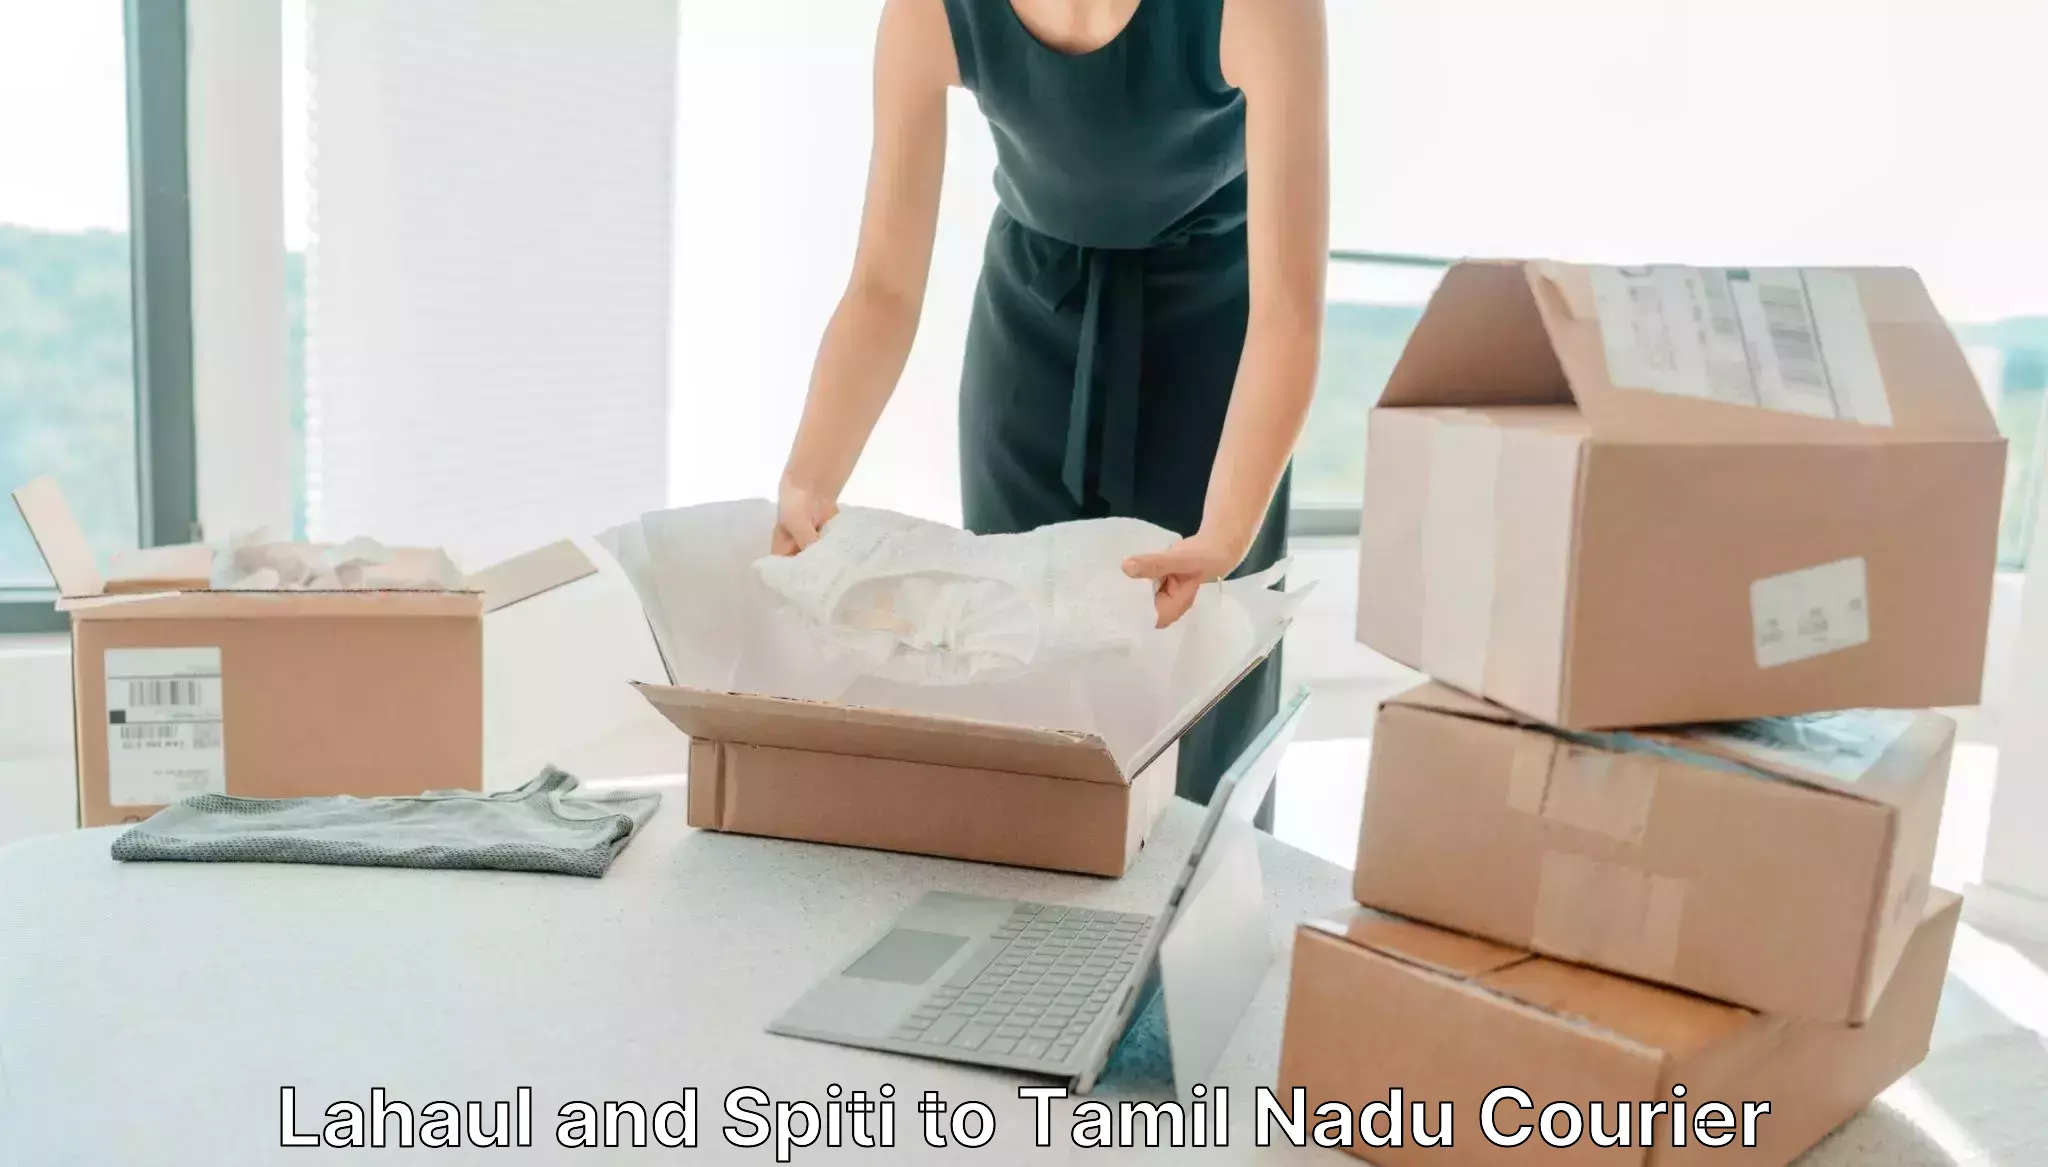 Courier service efficiency Lahaul and Spiti to Thirukkattupalli